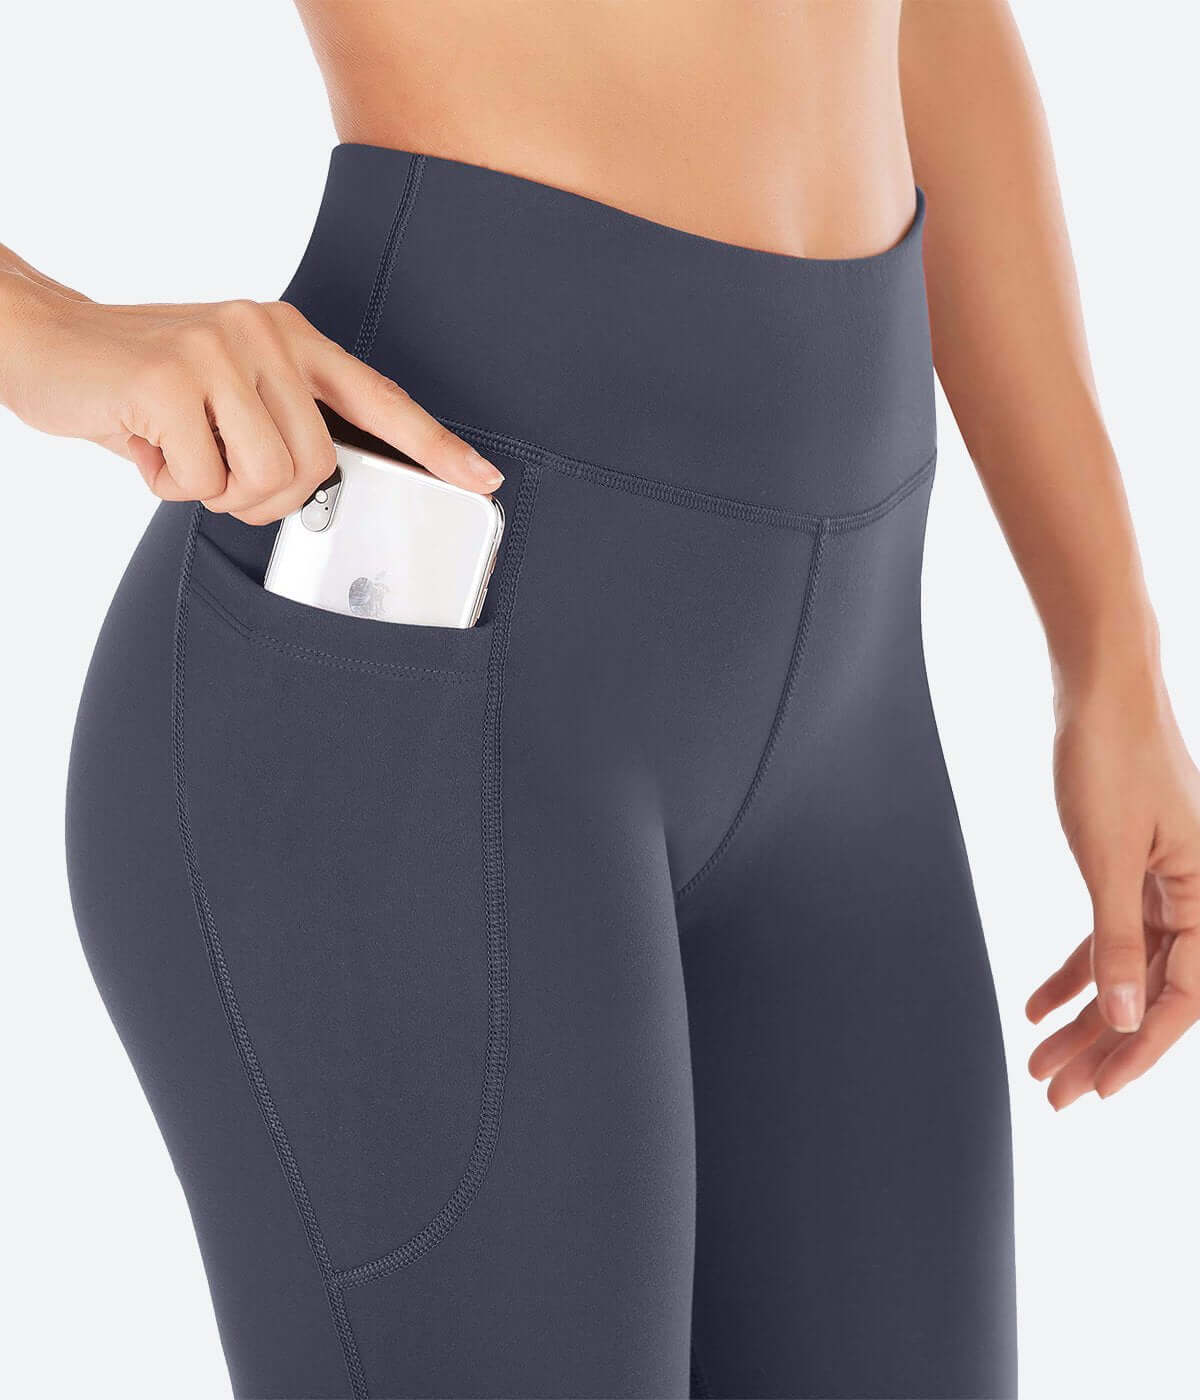 kpoplk Bootcut Yoga Pants For Women,Womens Leggings Kids Dance Workout  Running Yoga Pants with Hidden Pocket(A,L)